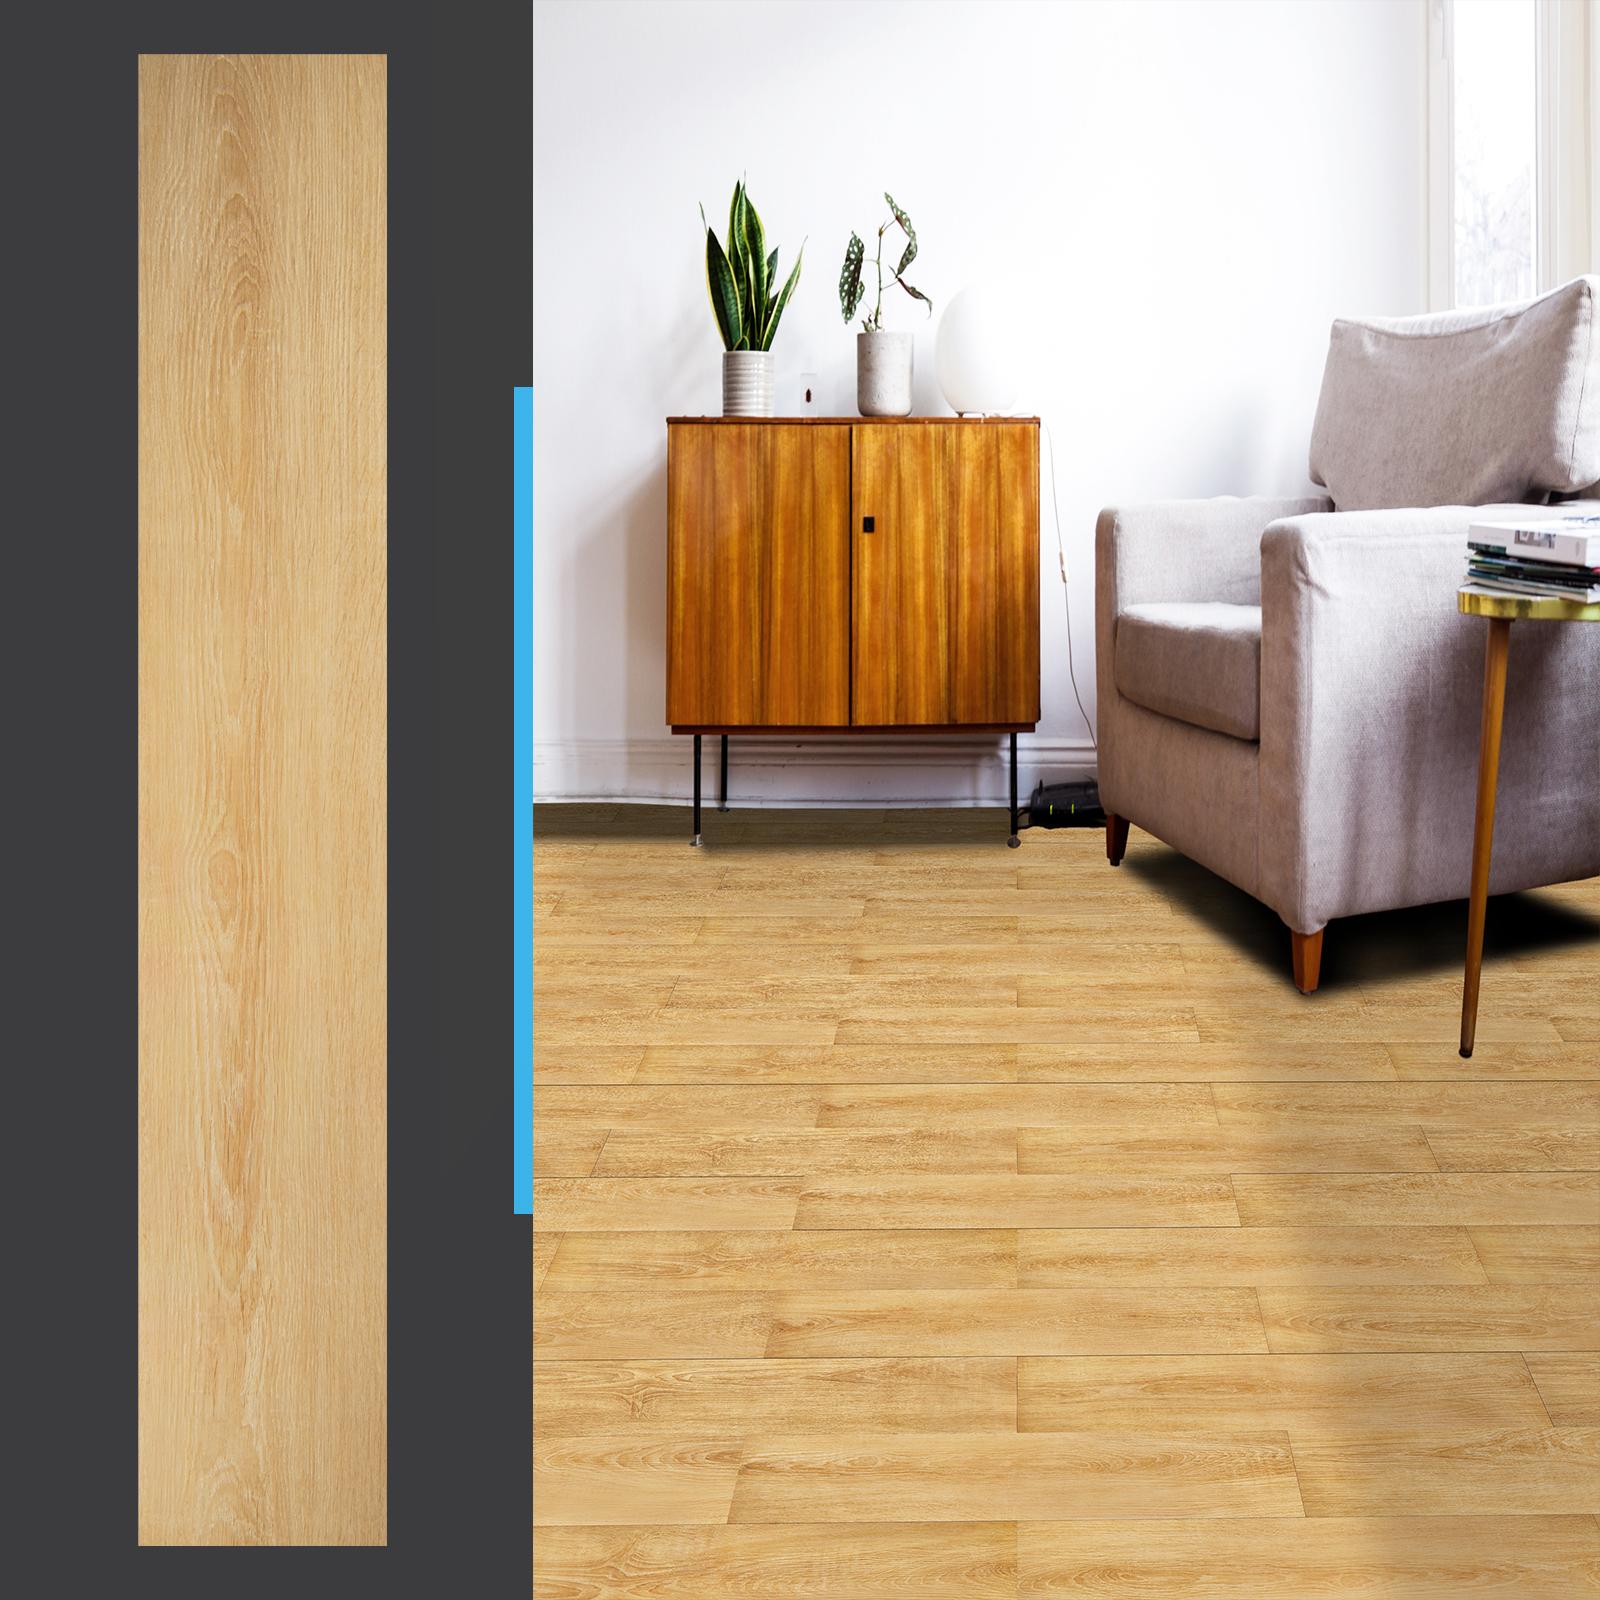 A43004 - Peel and Stick Floor Tile Vinyl Wood Plank 36-Pack 54 Sq.Ft,Rigid Surface Hard Core,Easy DIY Self-Adhesive Flooring